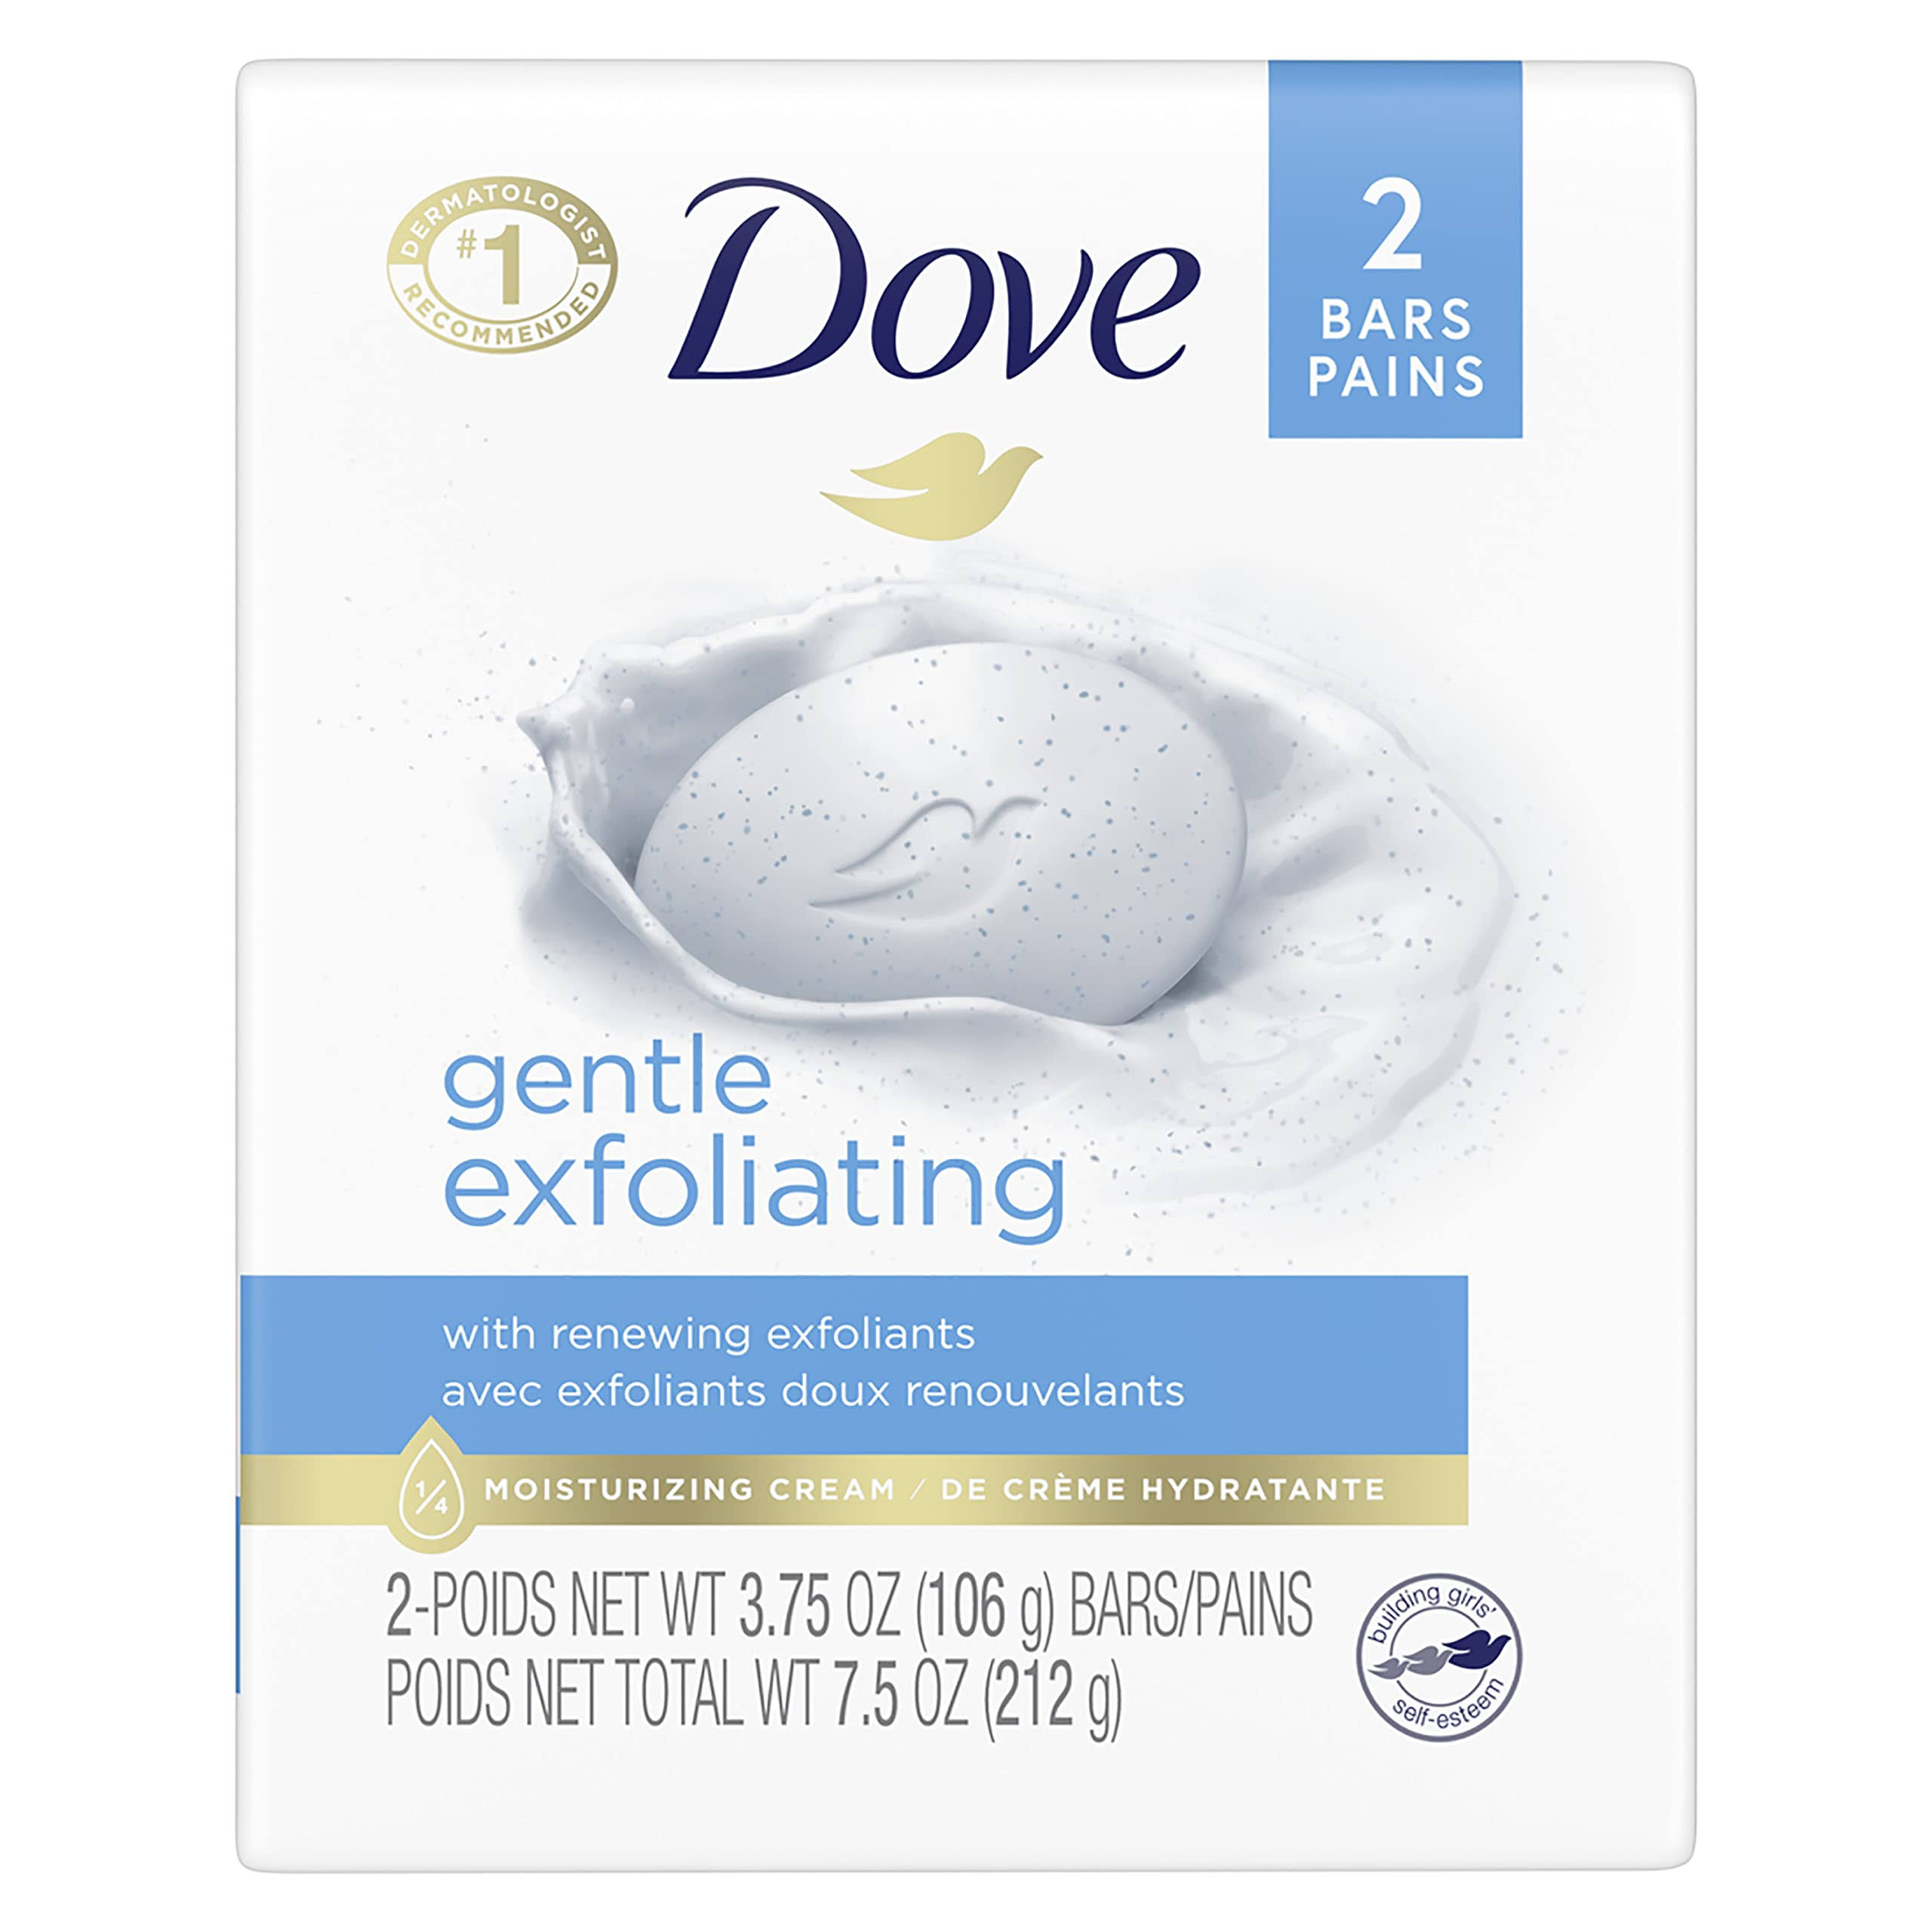 Dove Gentle Exfoliating 1/4 Moisturizing Cream Beauty Bar - 2 x 4 oz